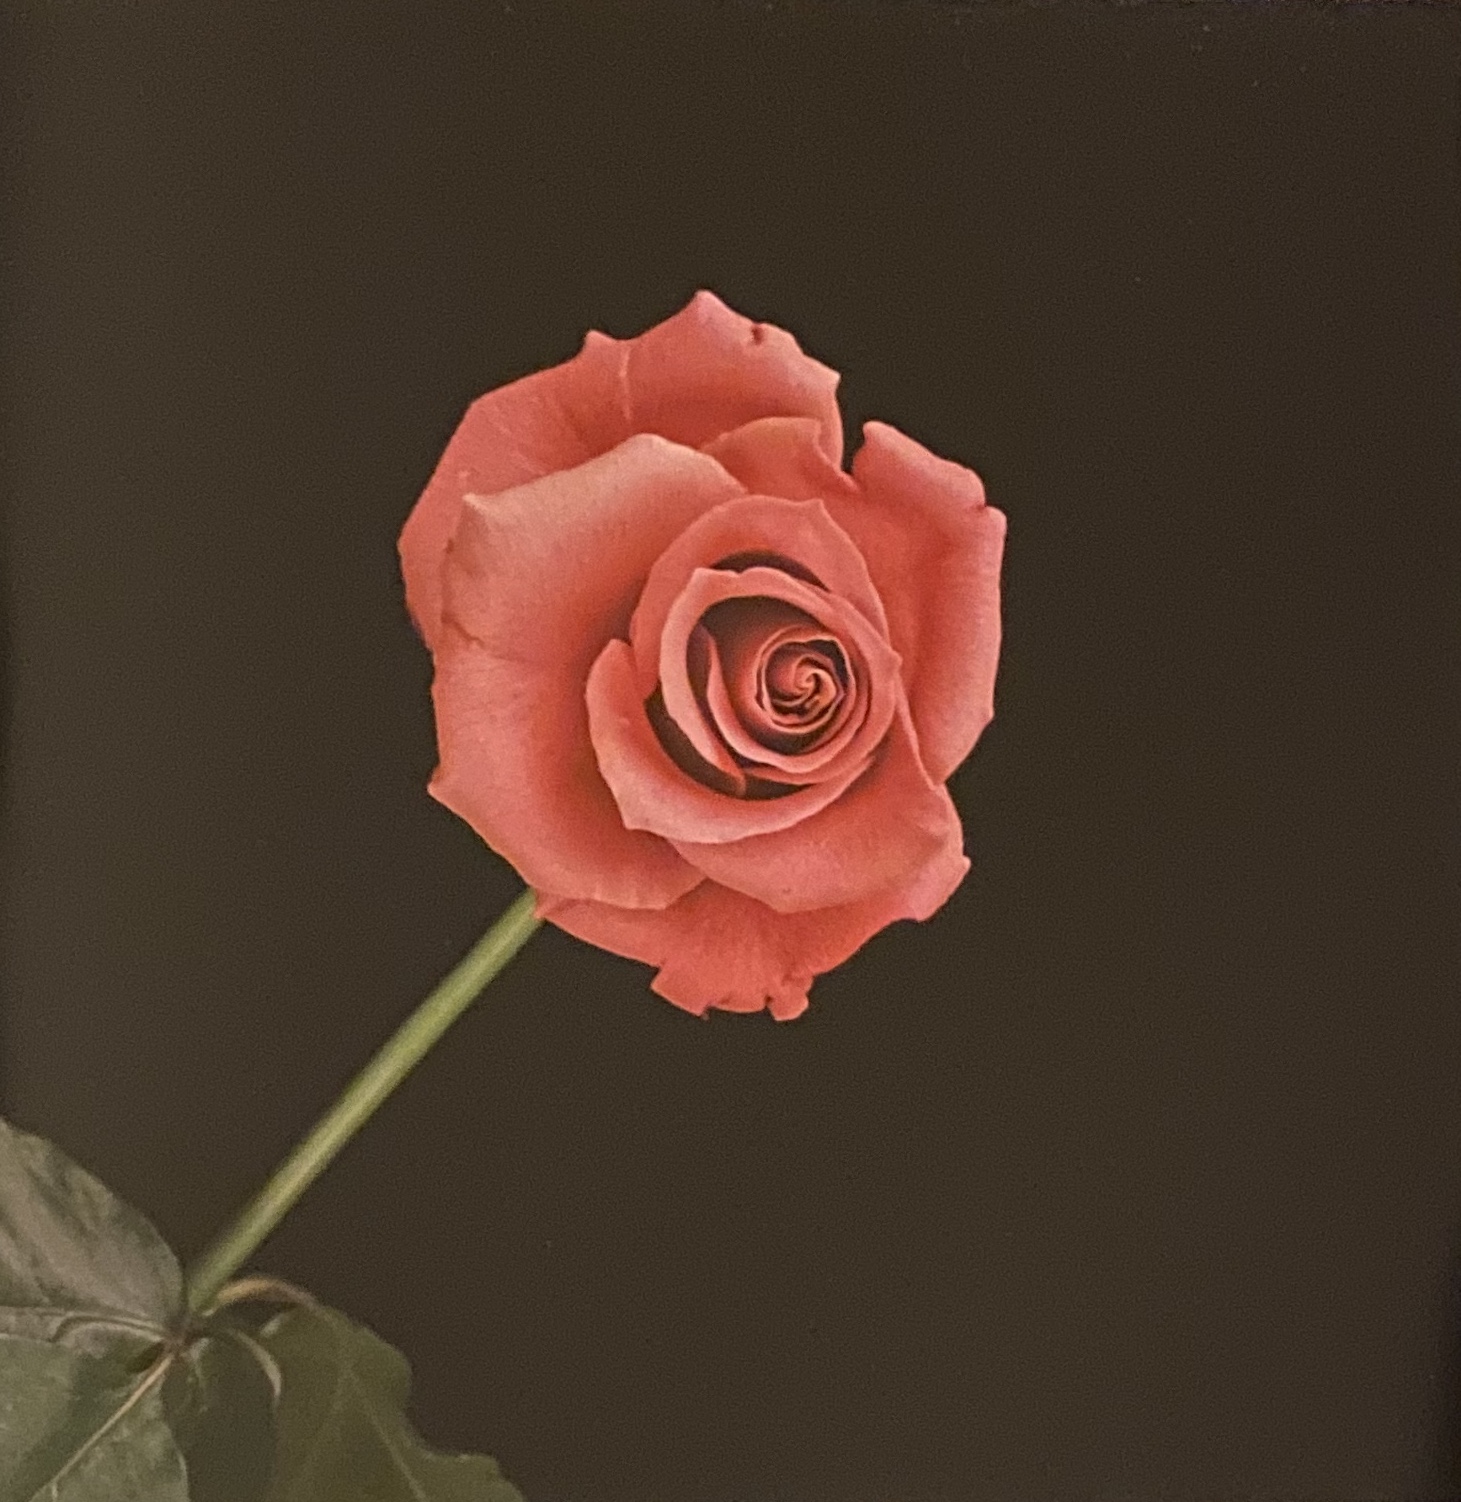 A single rose, centered on a black background